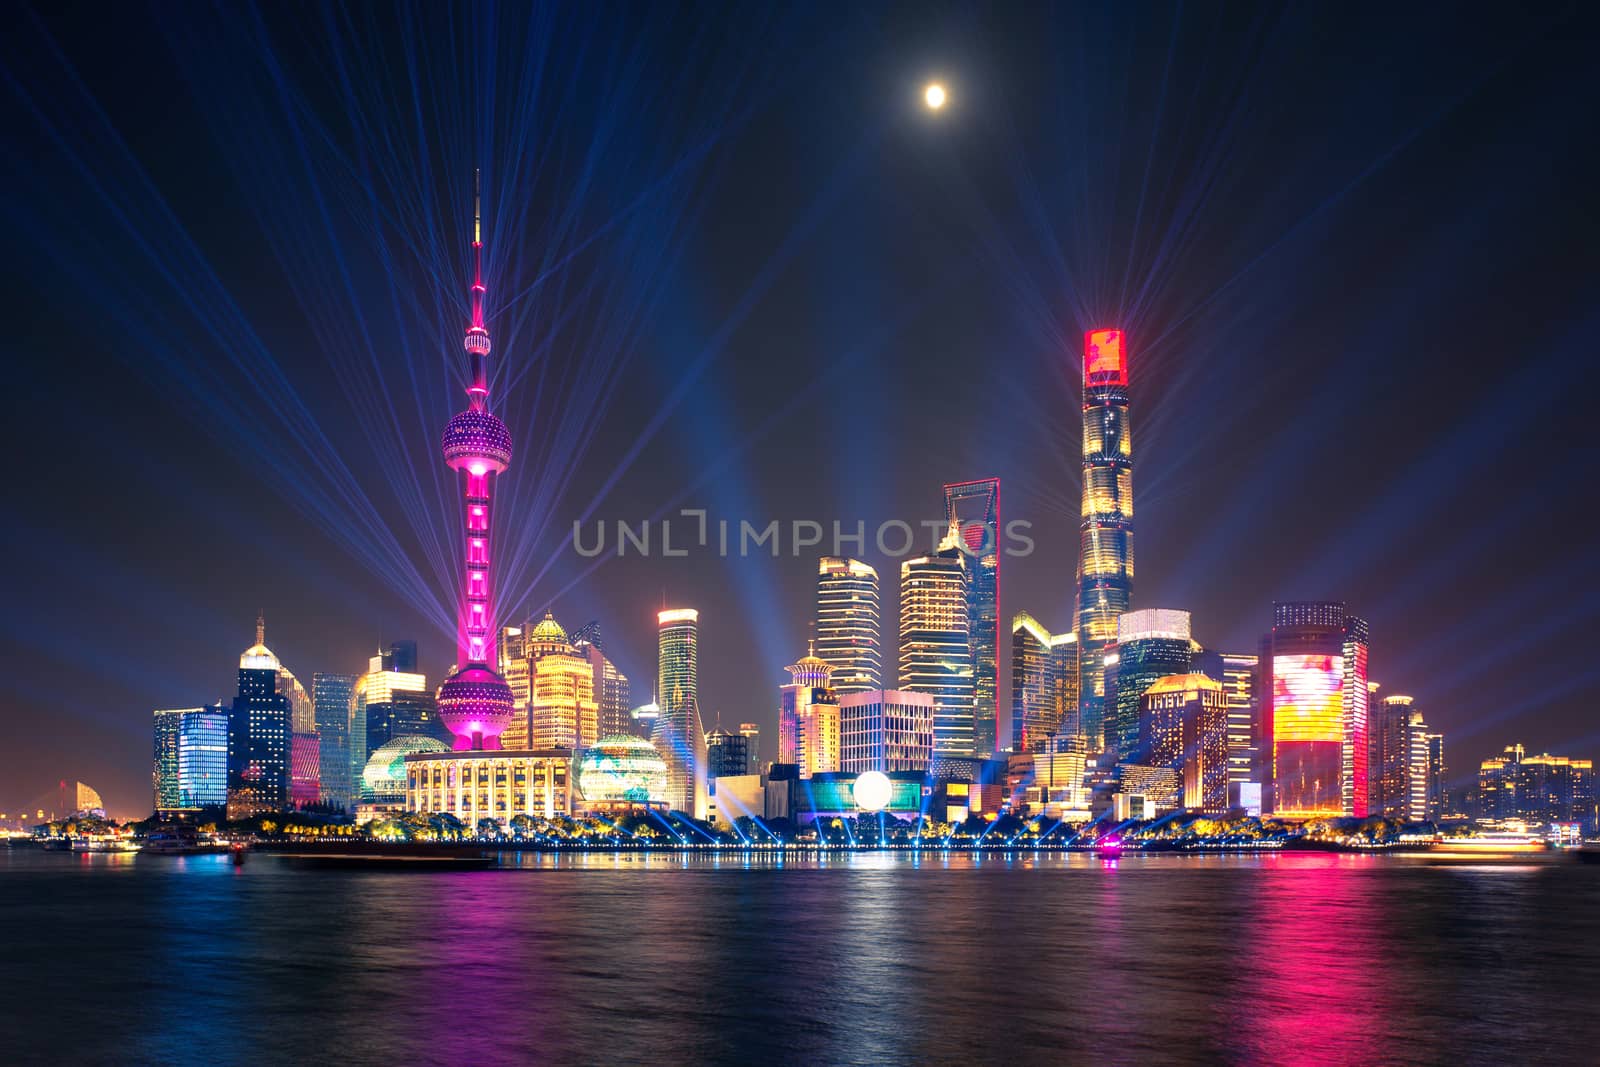 laser show over illuminated Lujiazui skyline and Huangpu river at night, Shanghai, China